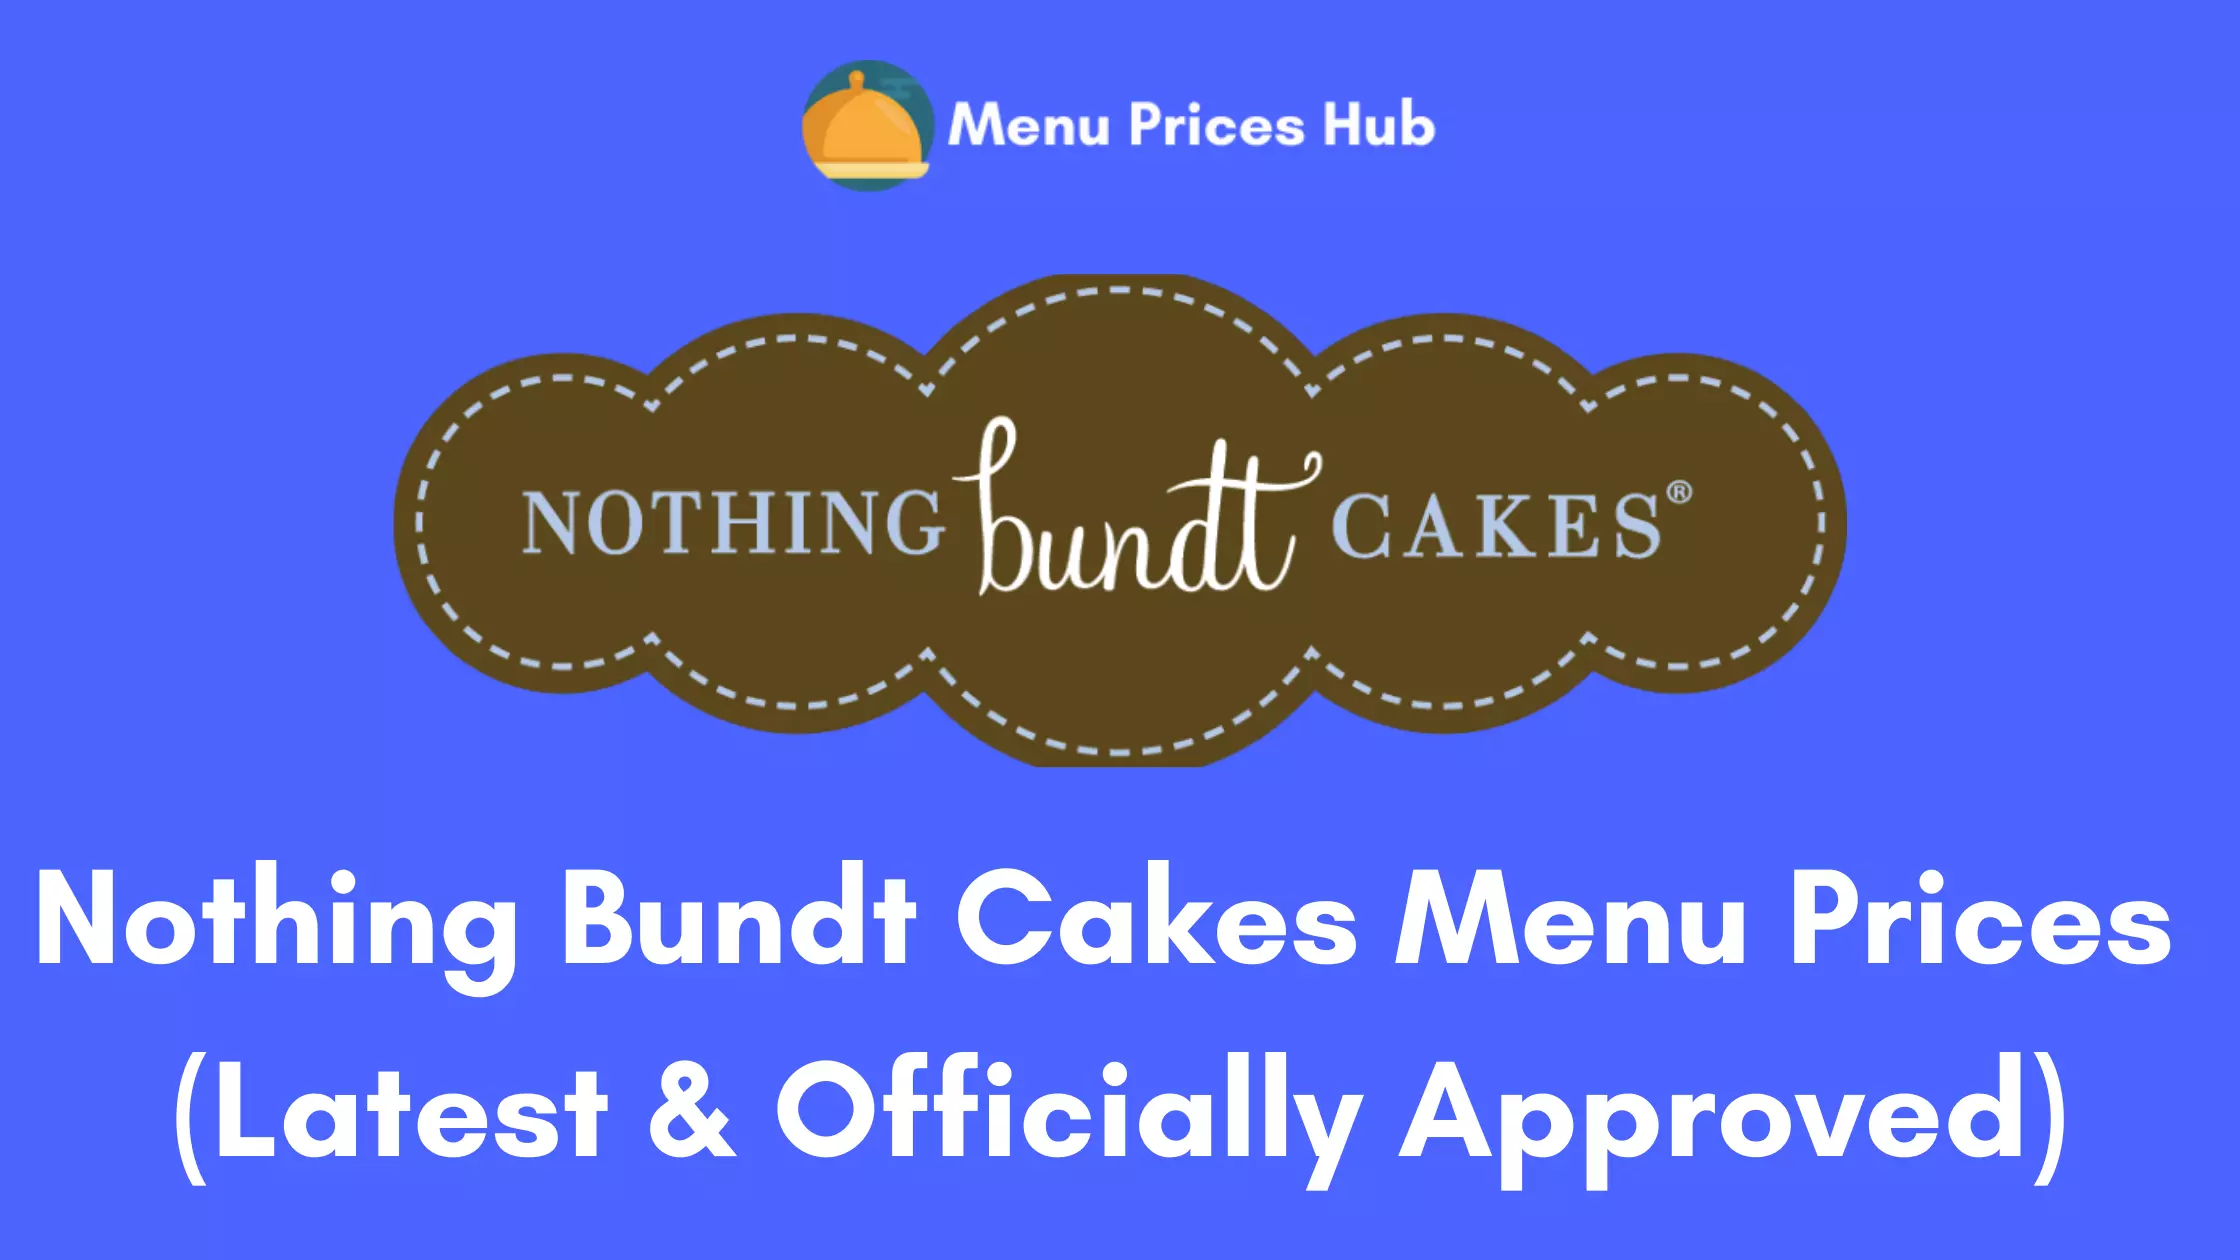 Nothing Bundt Cakes menu prices